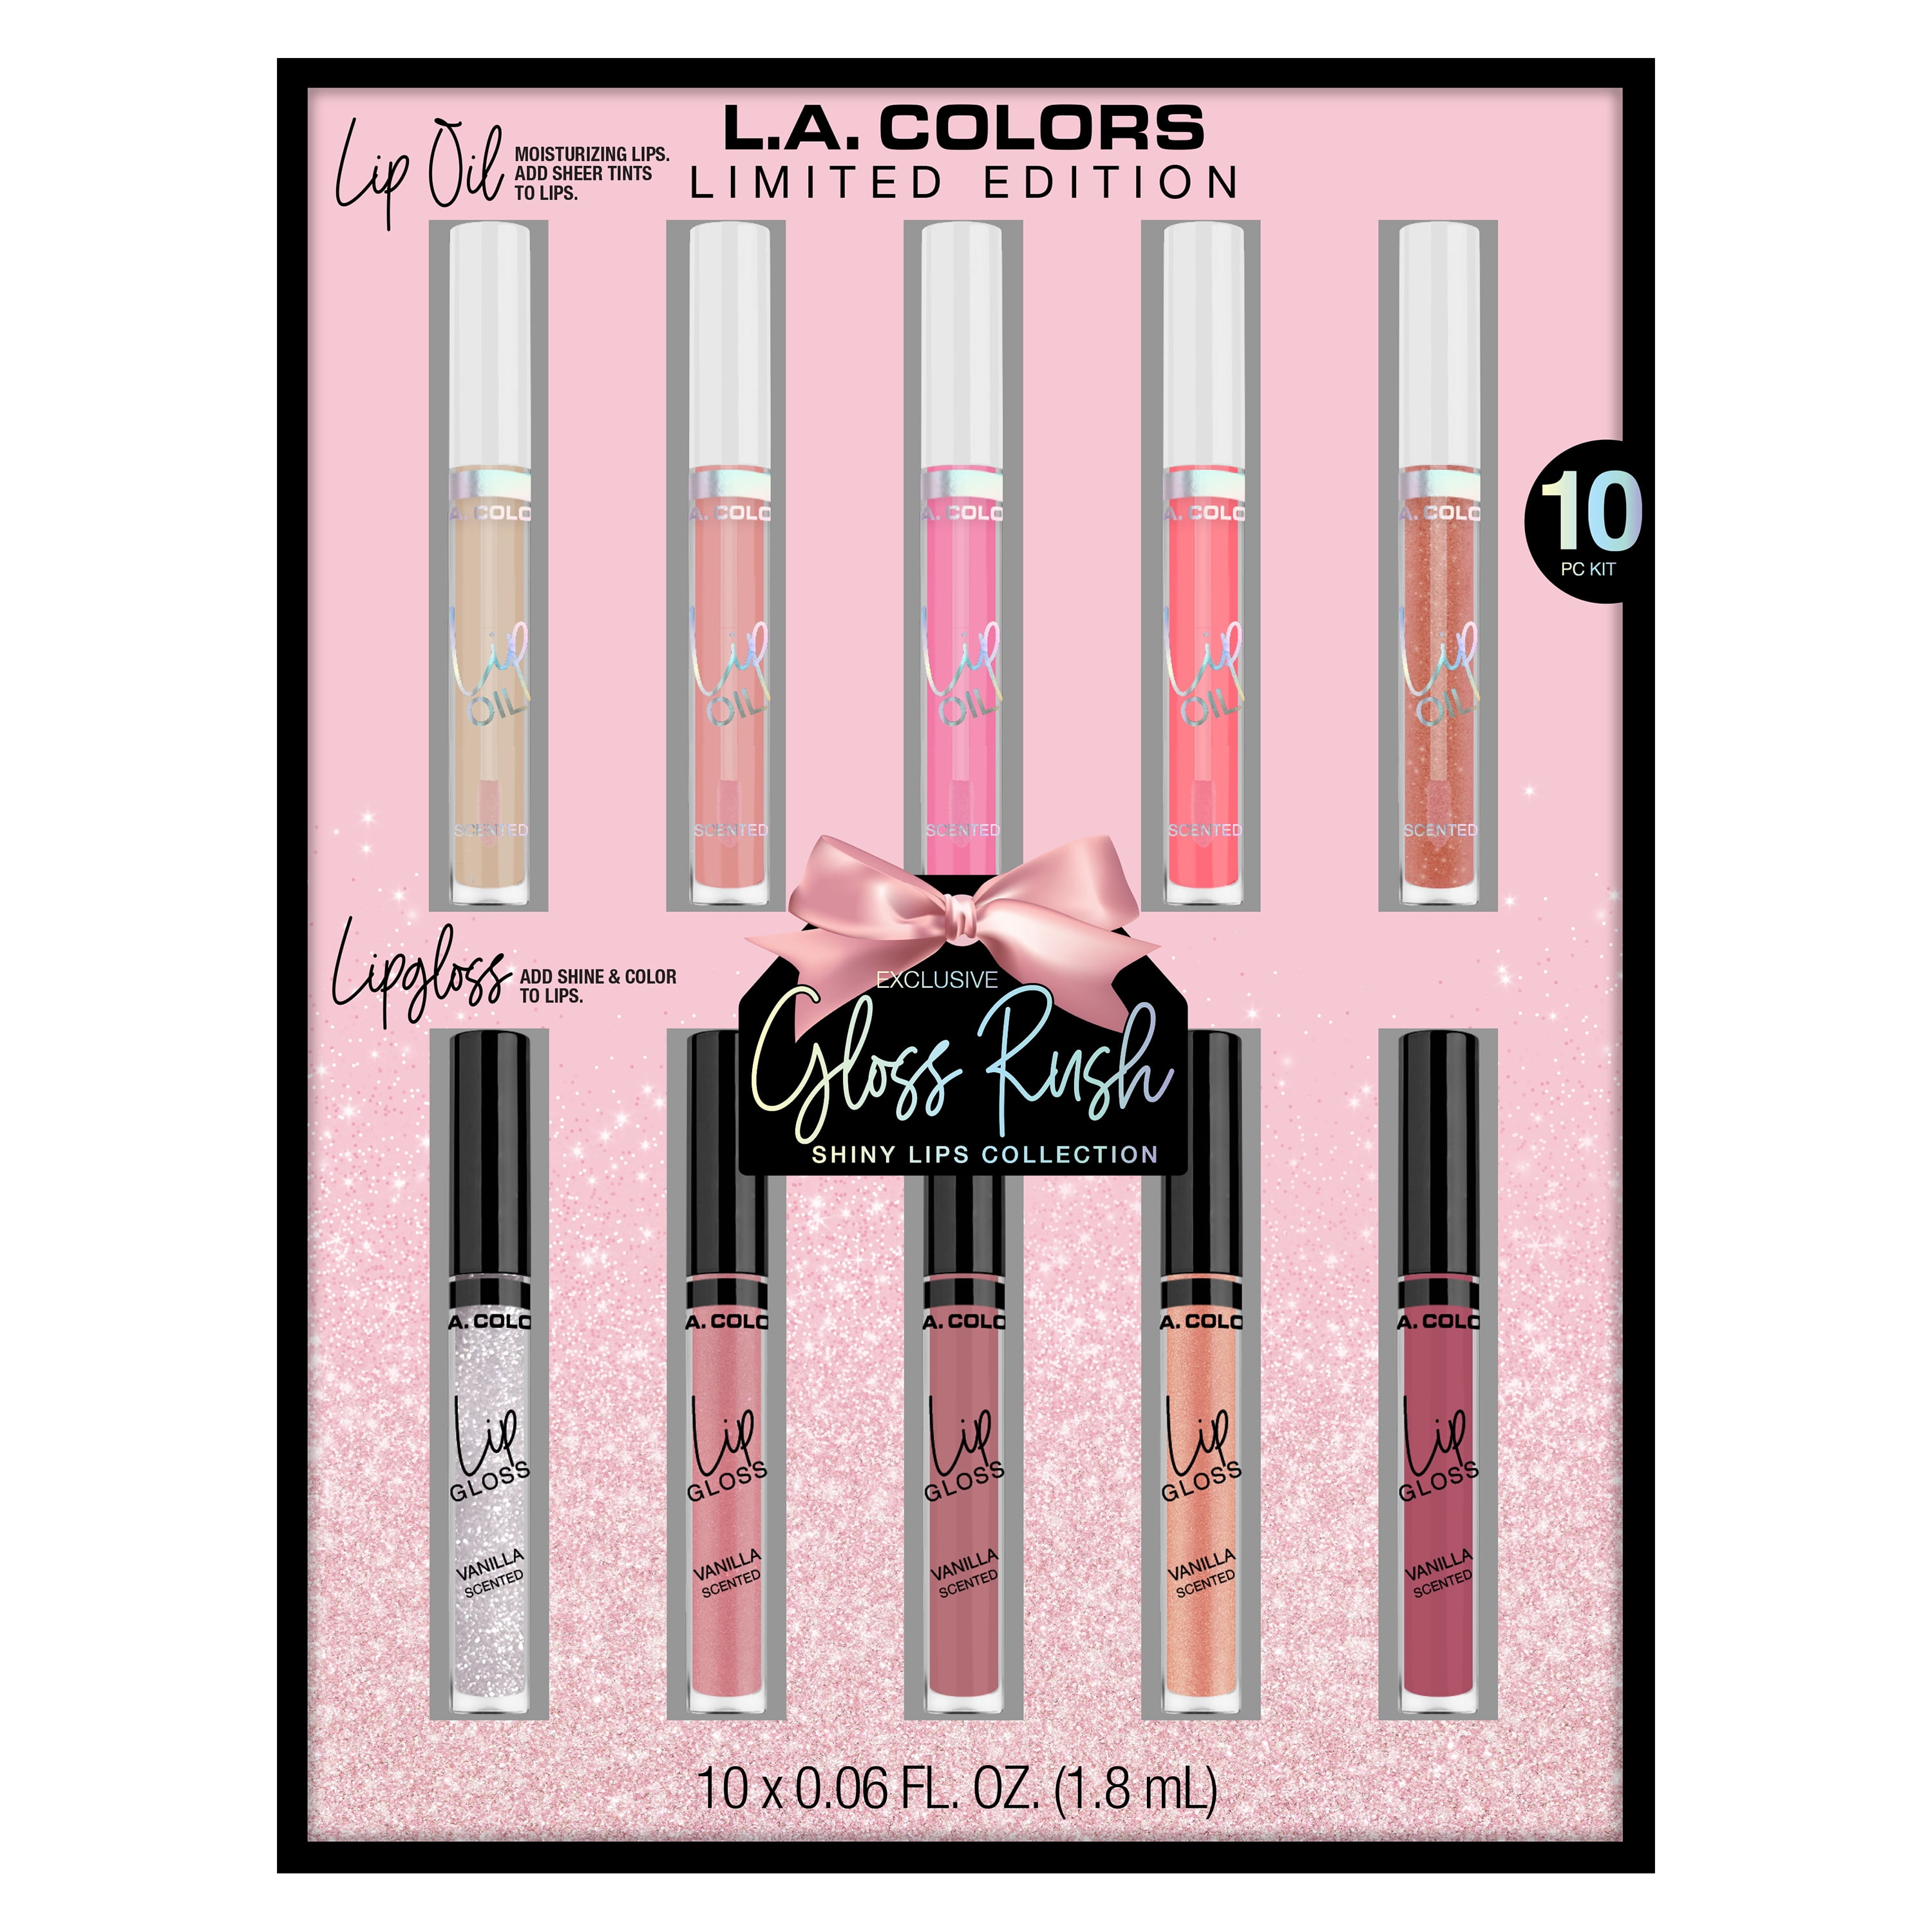 L.A. COLORS Lipgloss, Gloss Rush Gift Set, 10 pc 